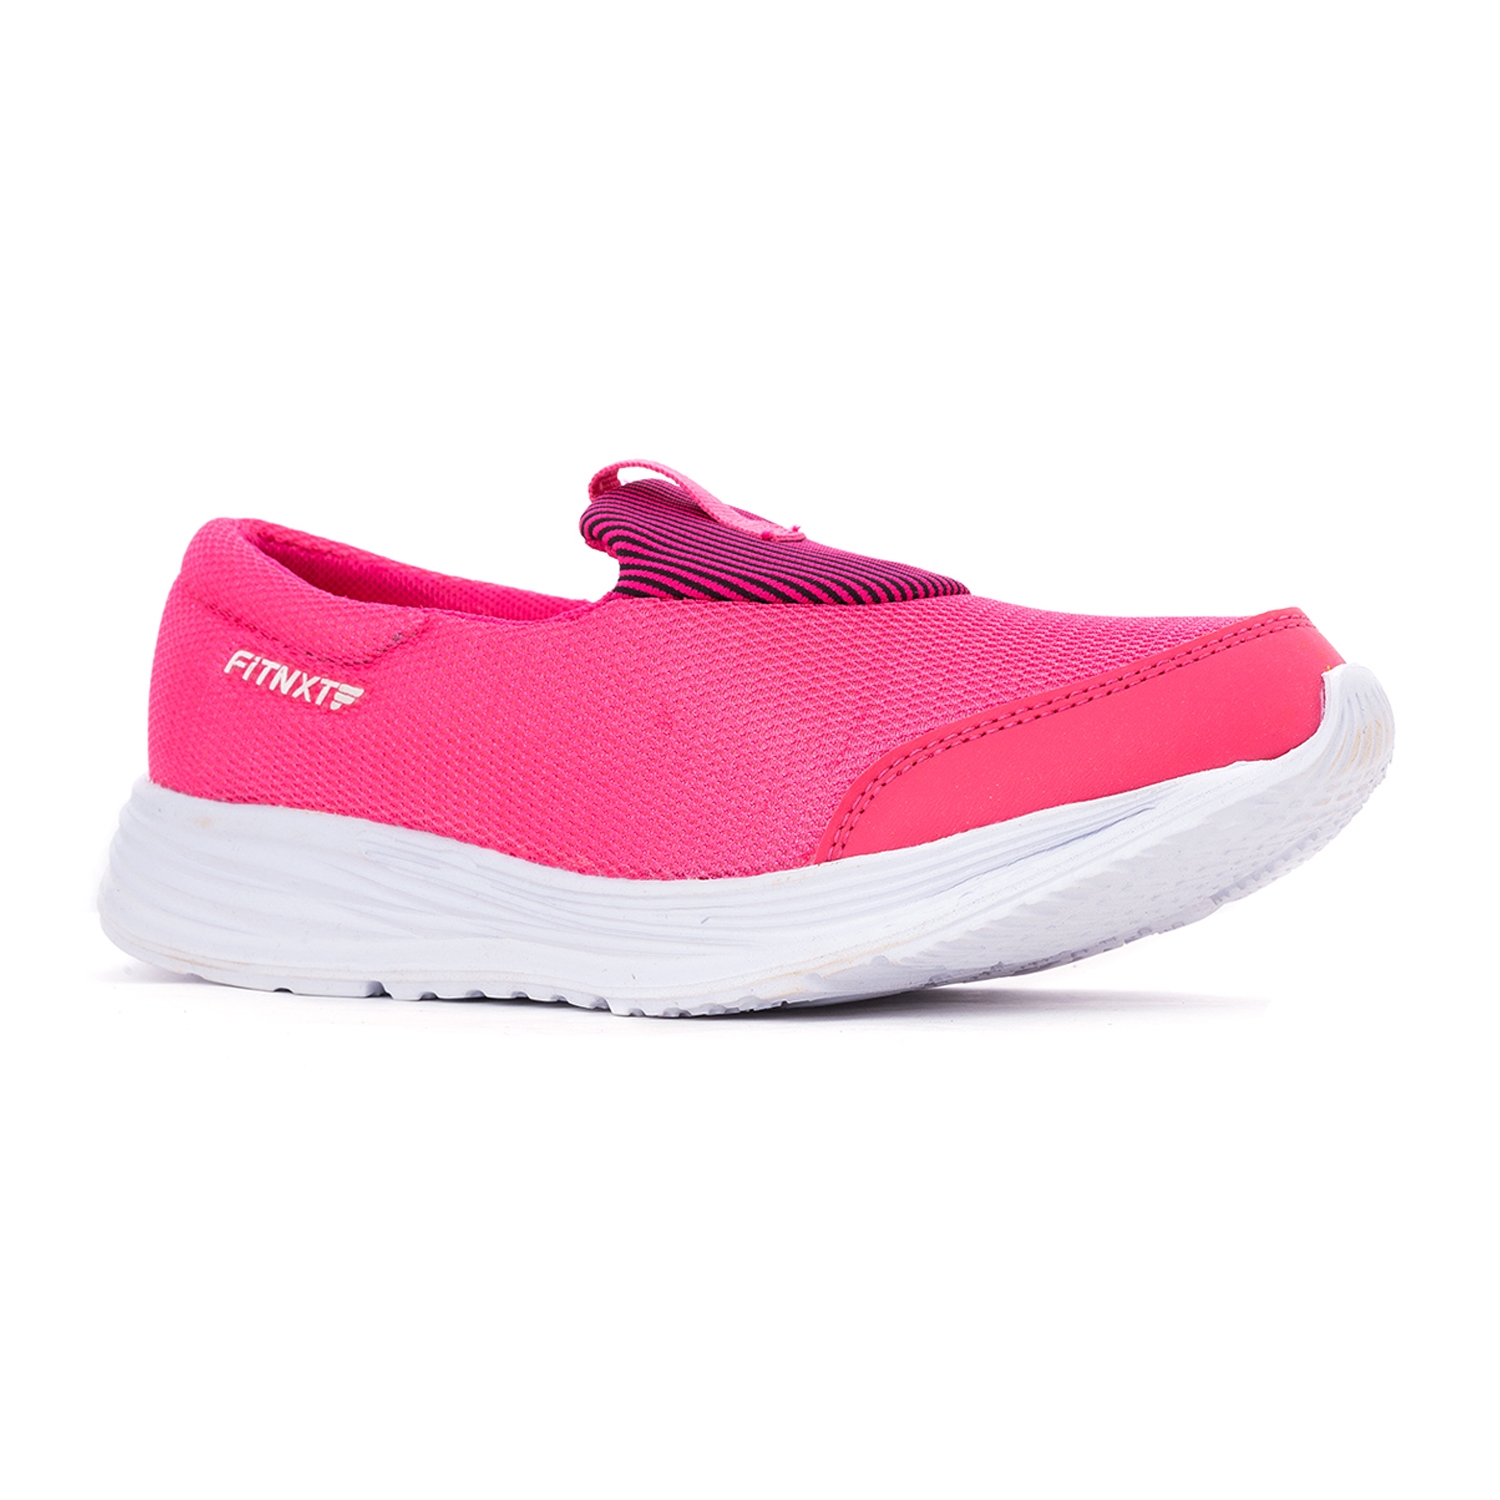 Khadim | Fitnxt Pink Walking Sports Shoes for Women